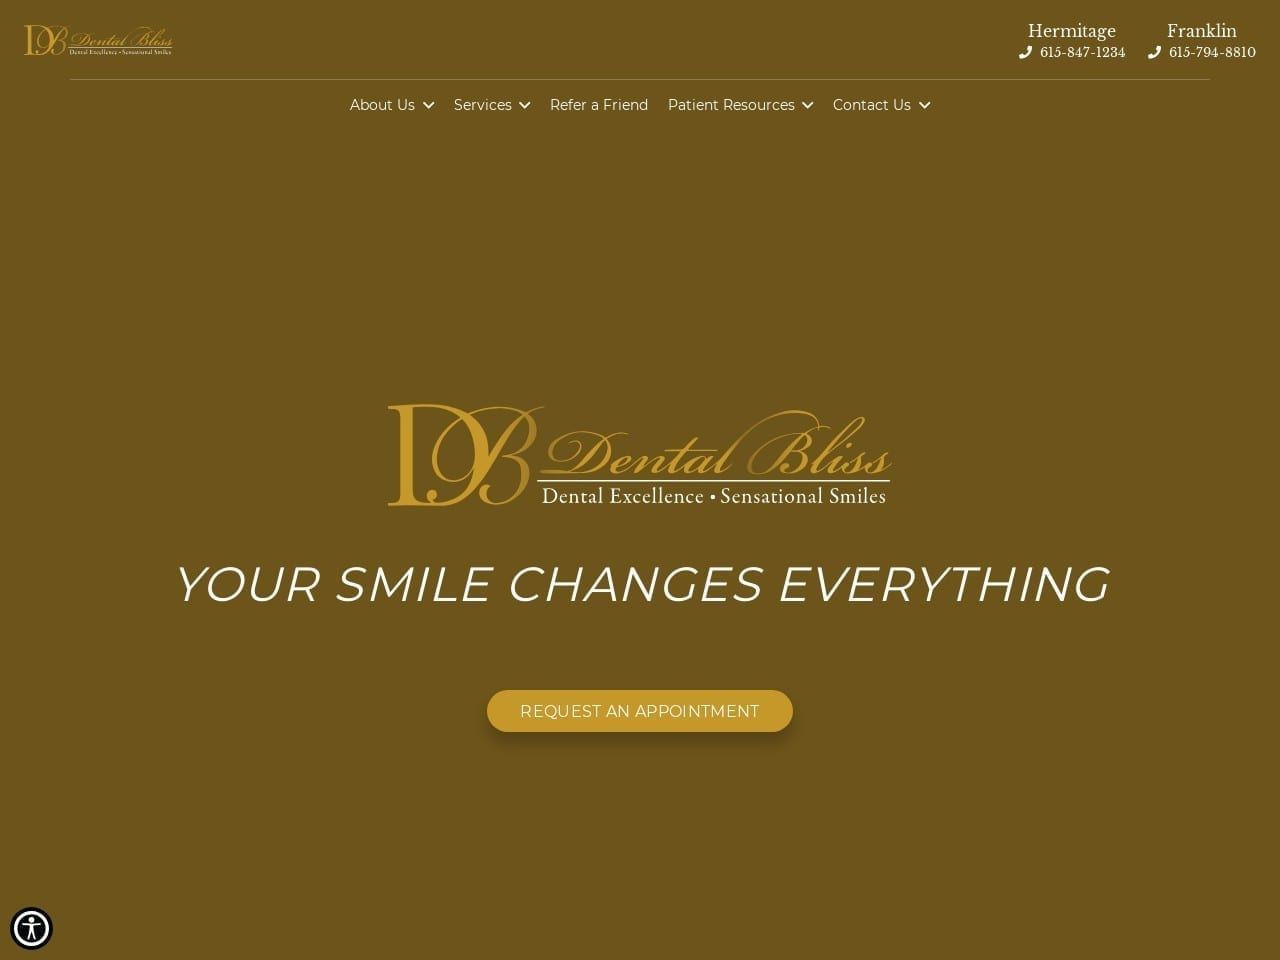 Dental Bliss Website Screenshot from dentalbliss.com